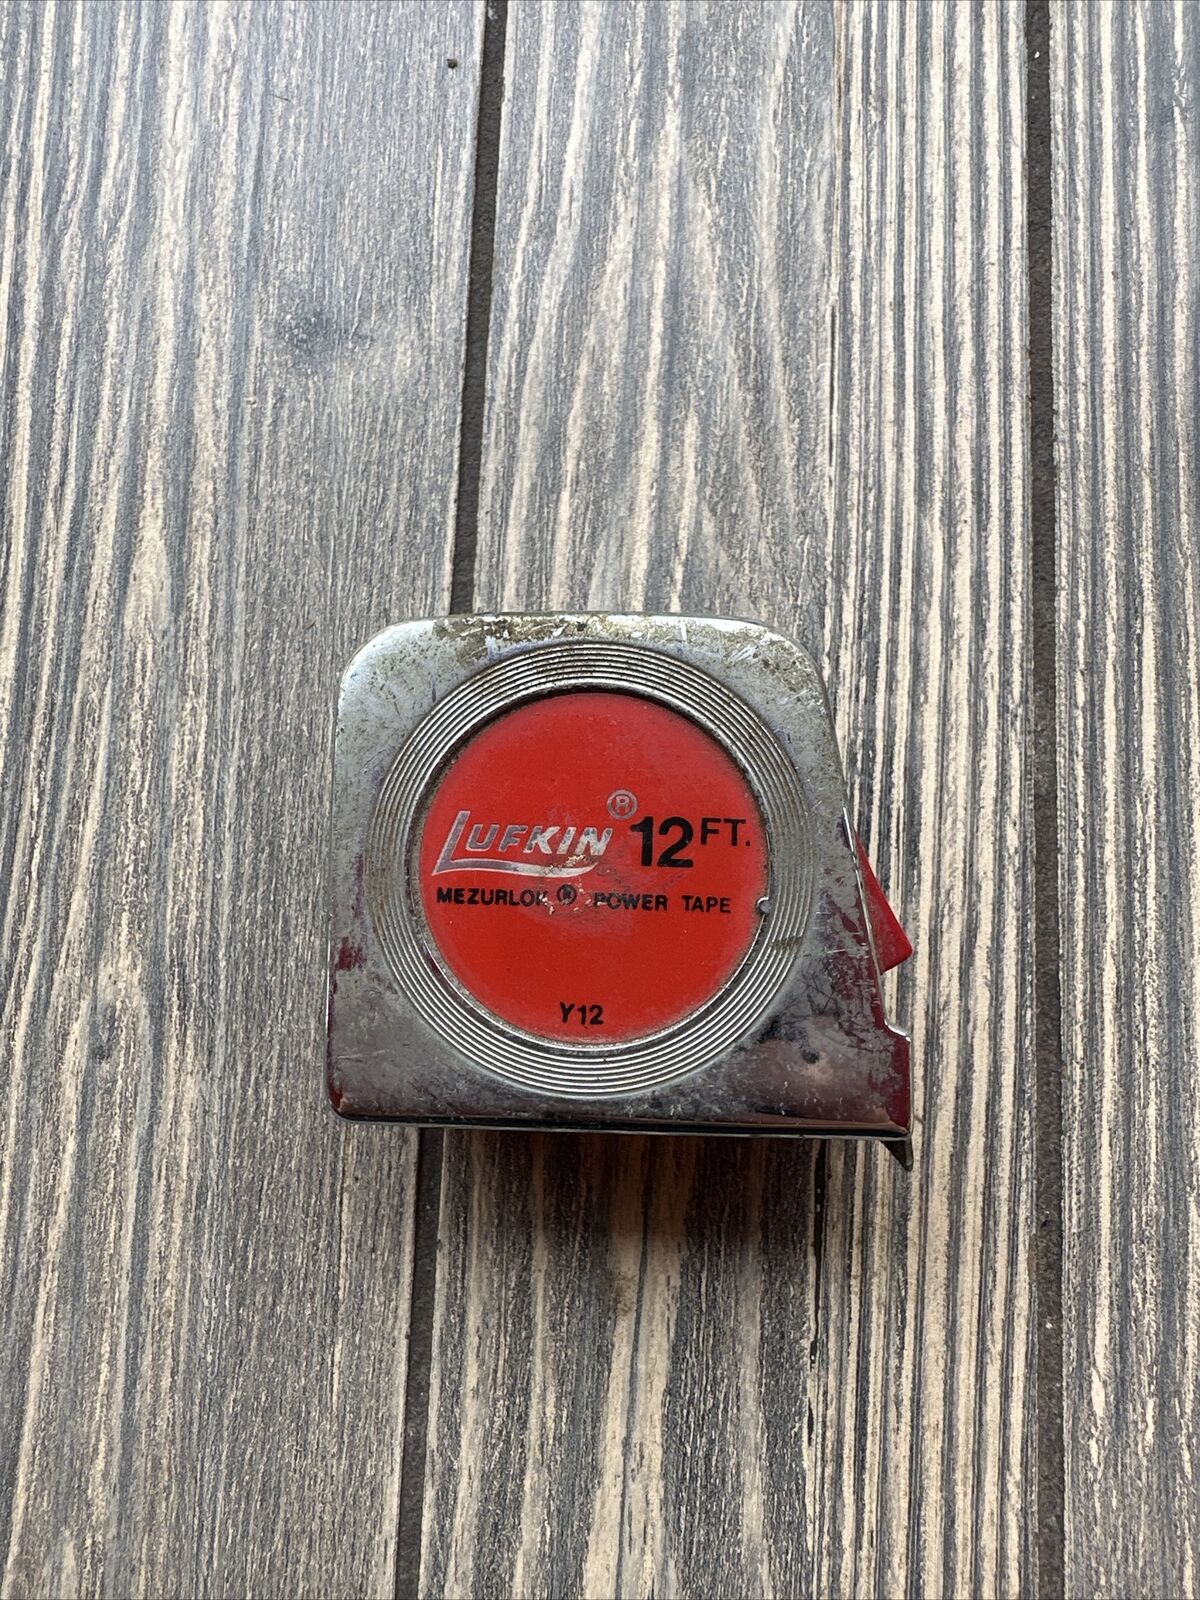 Lufkin 12 FT Tape Measure Mezurlok Power Tape Y12  Vintage